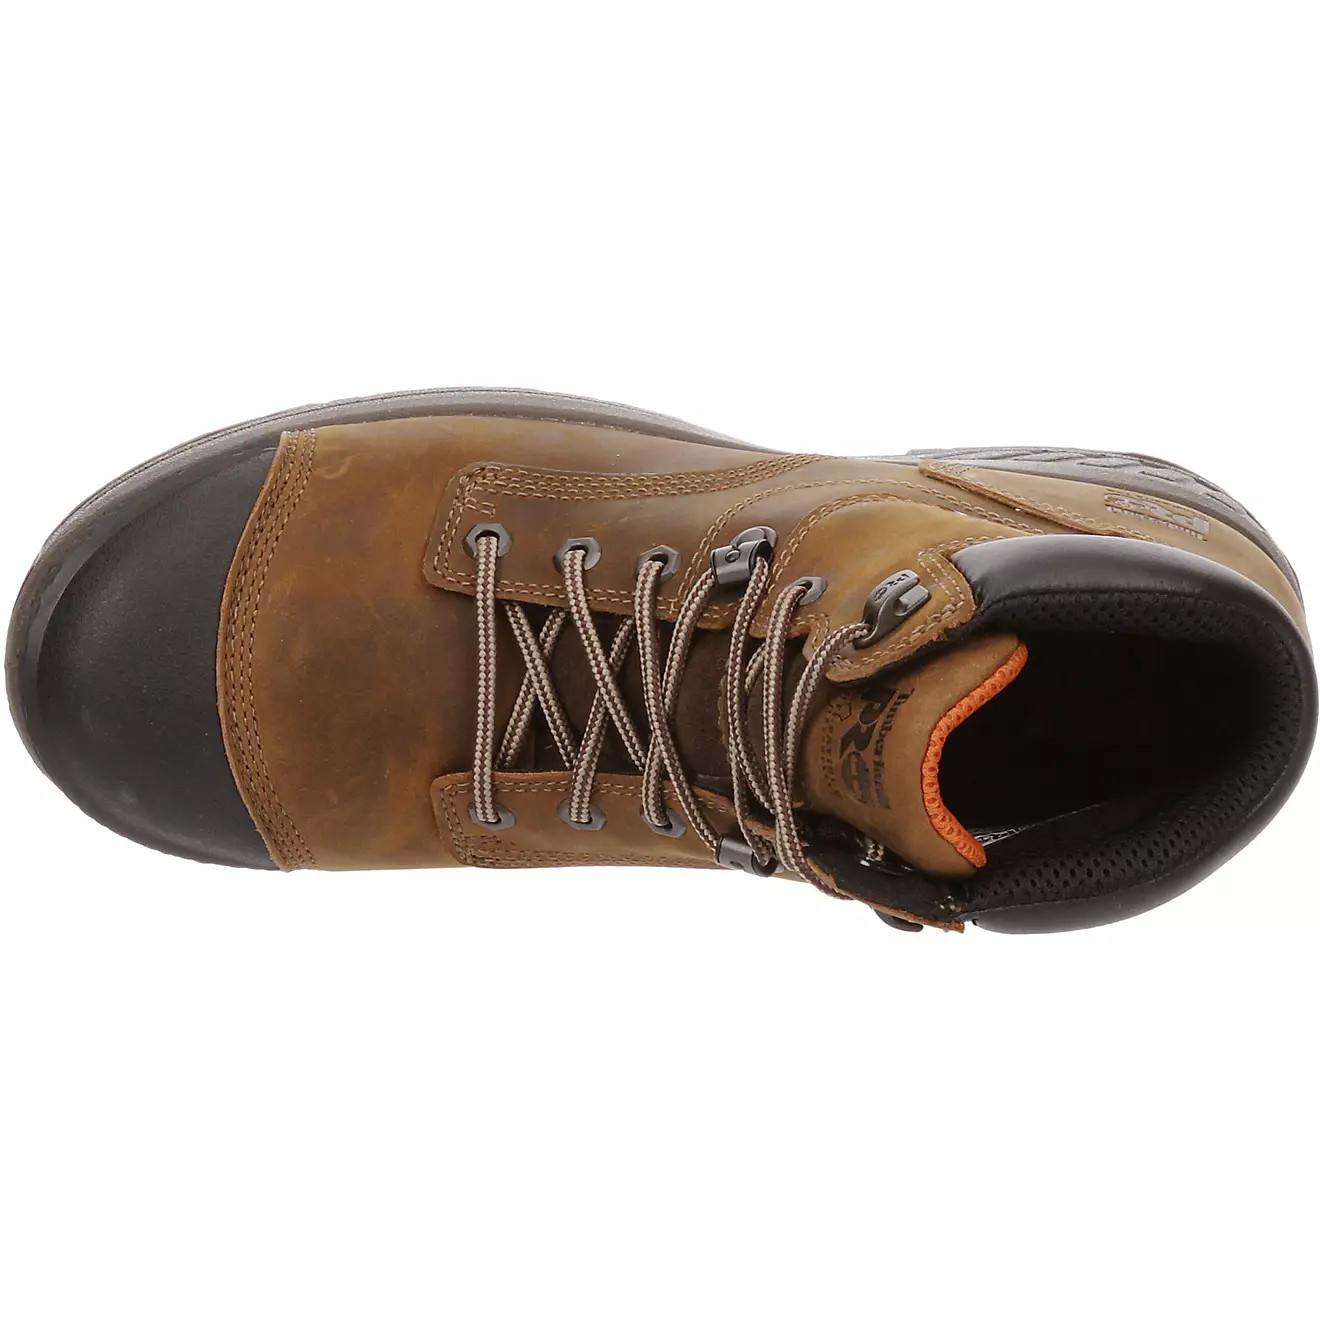 Timberland Men's Helix HD Comp Toe Waterproof Work Boots